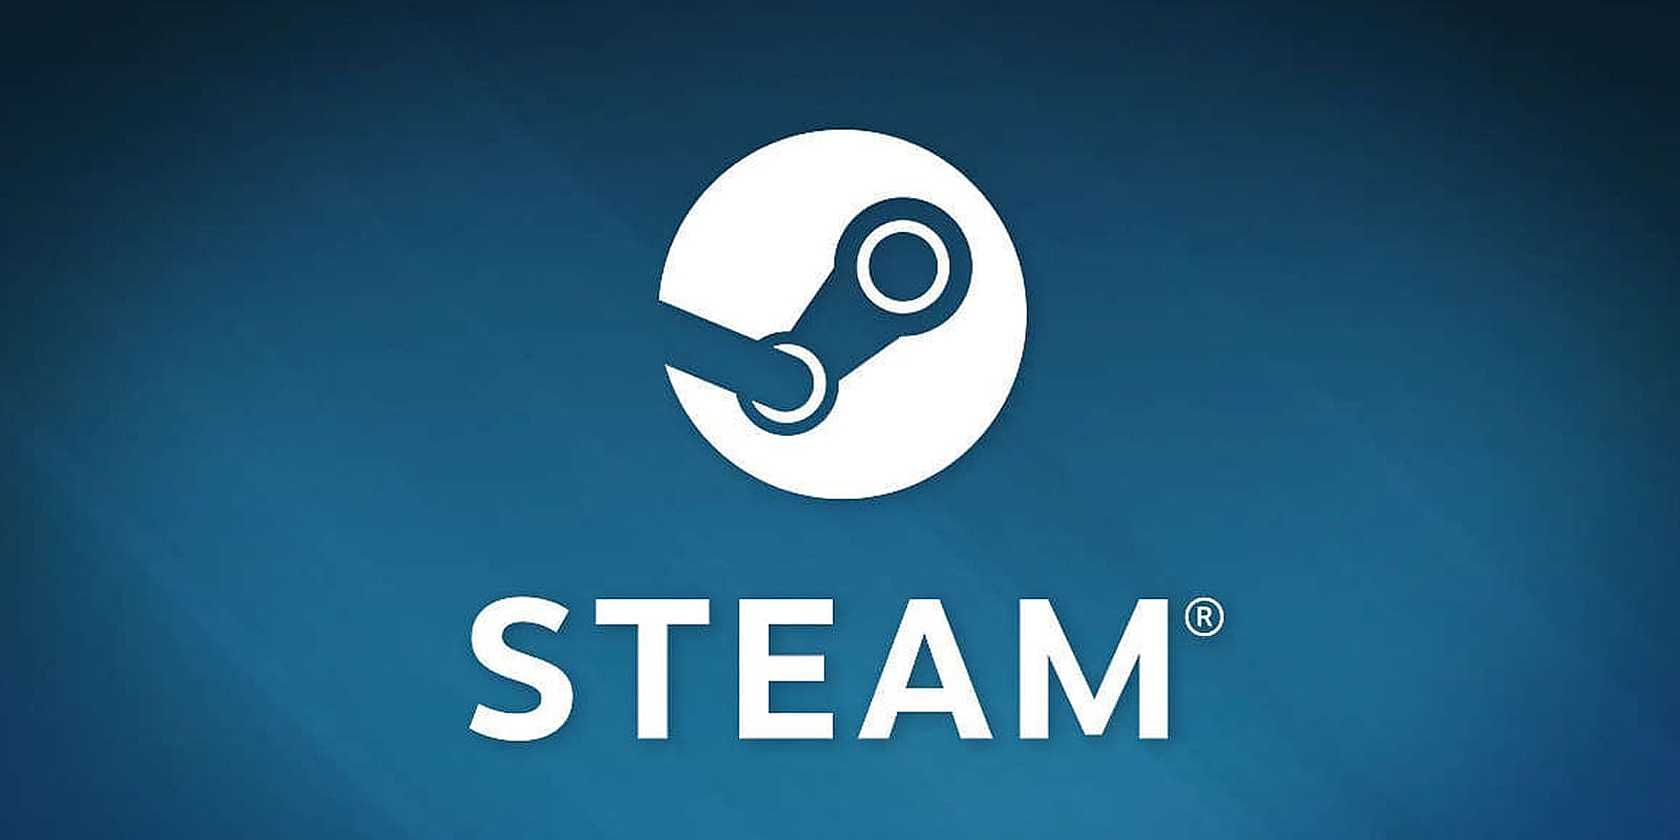 steam logo on a blue backgroud